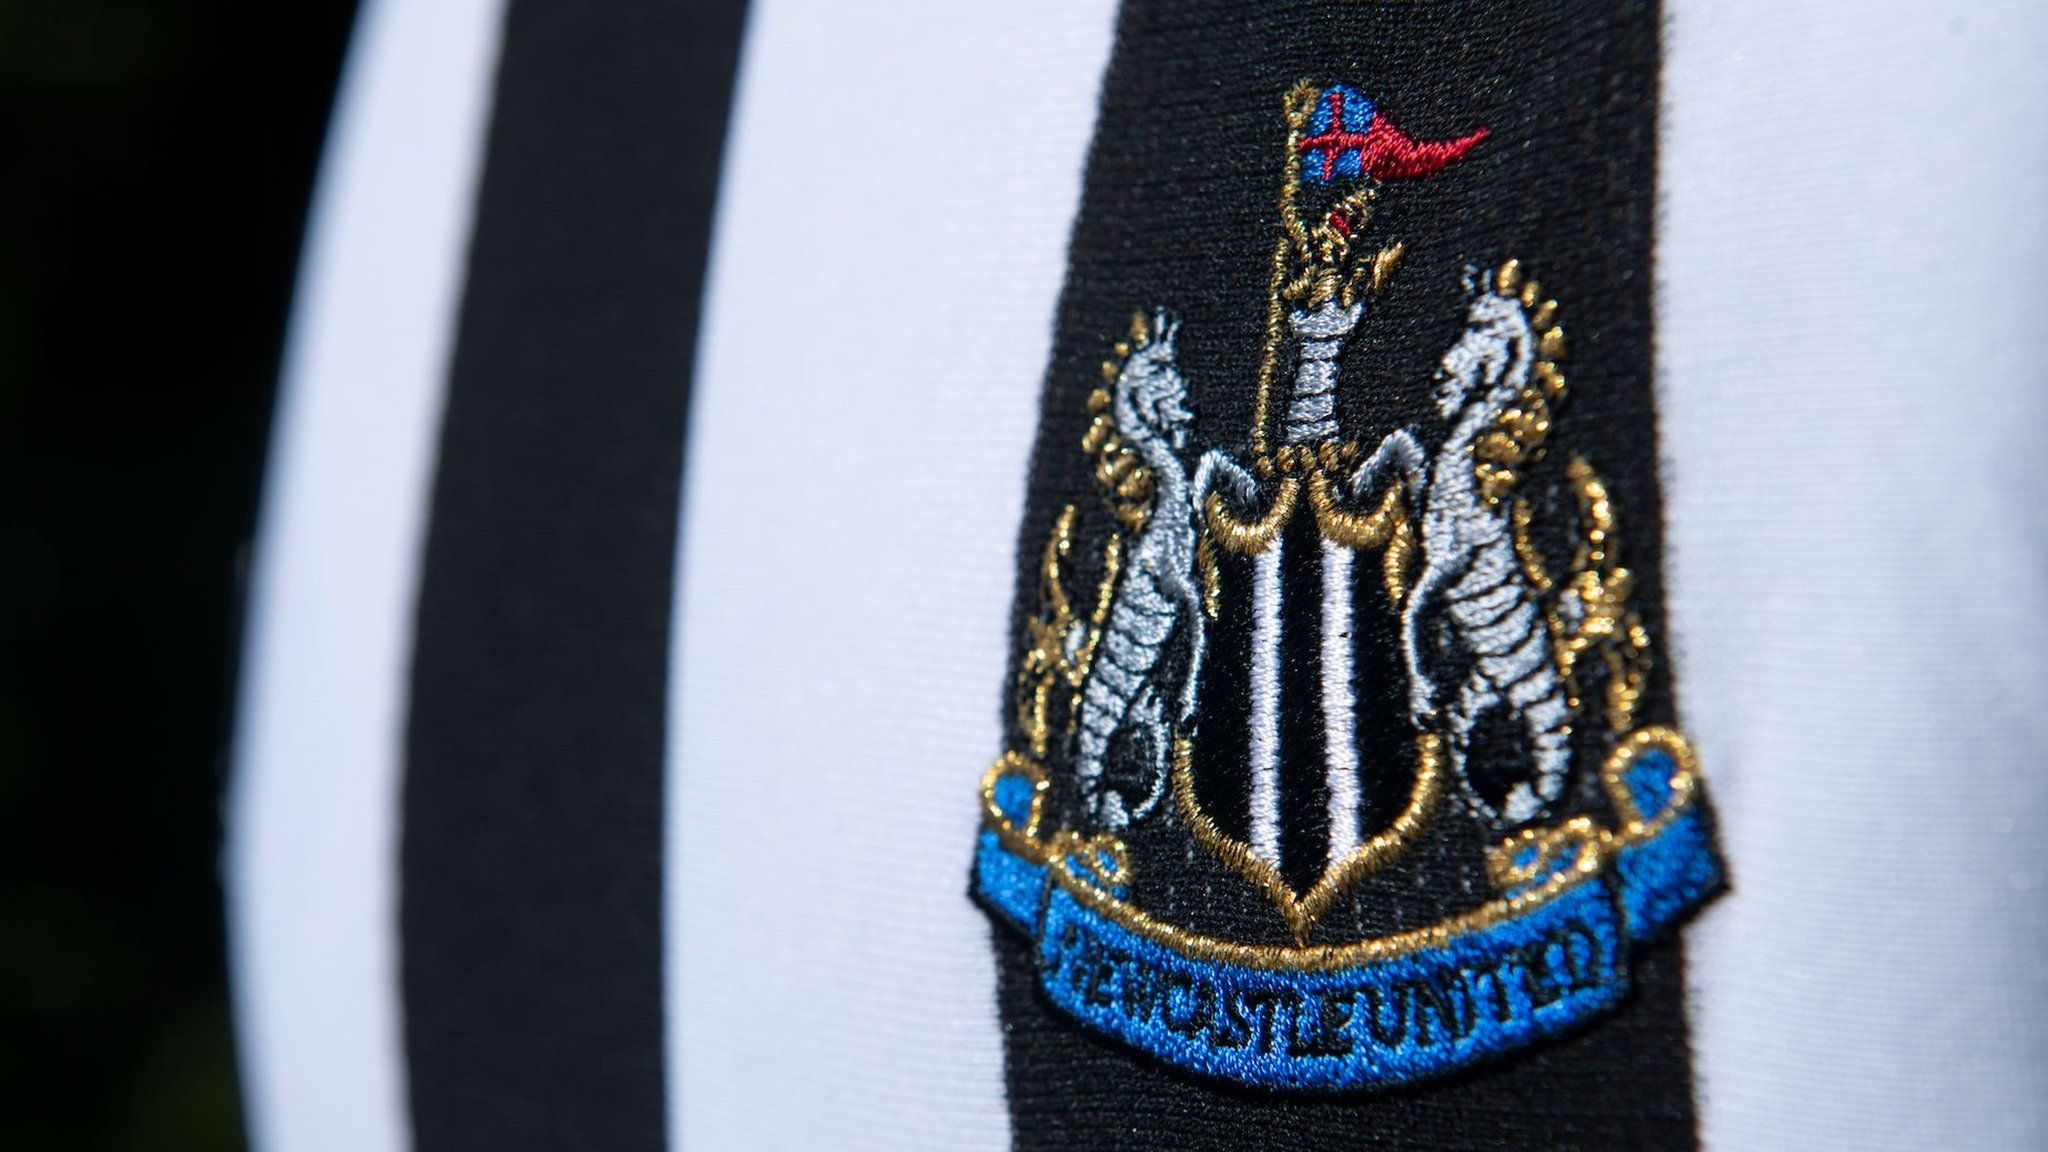 Newcastle United crest